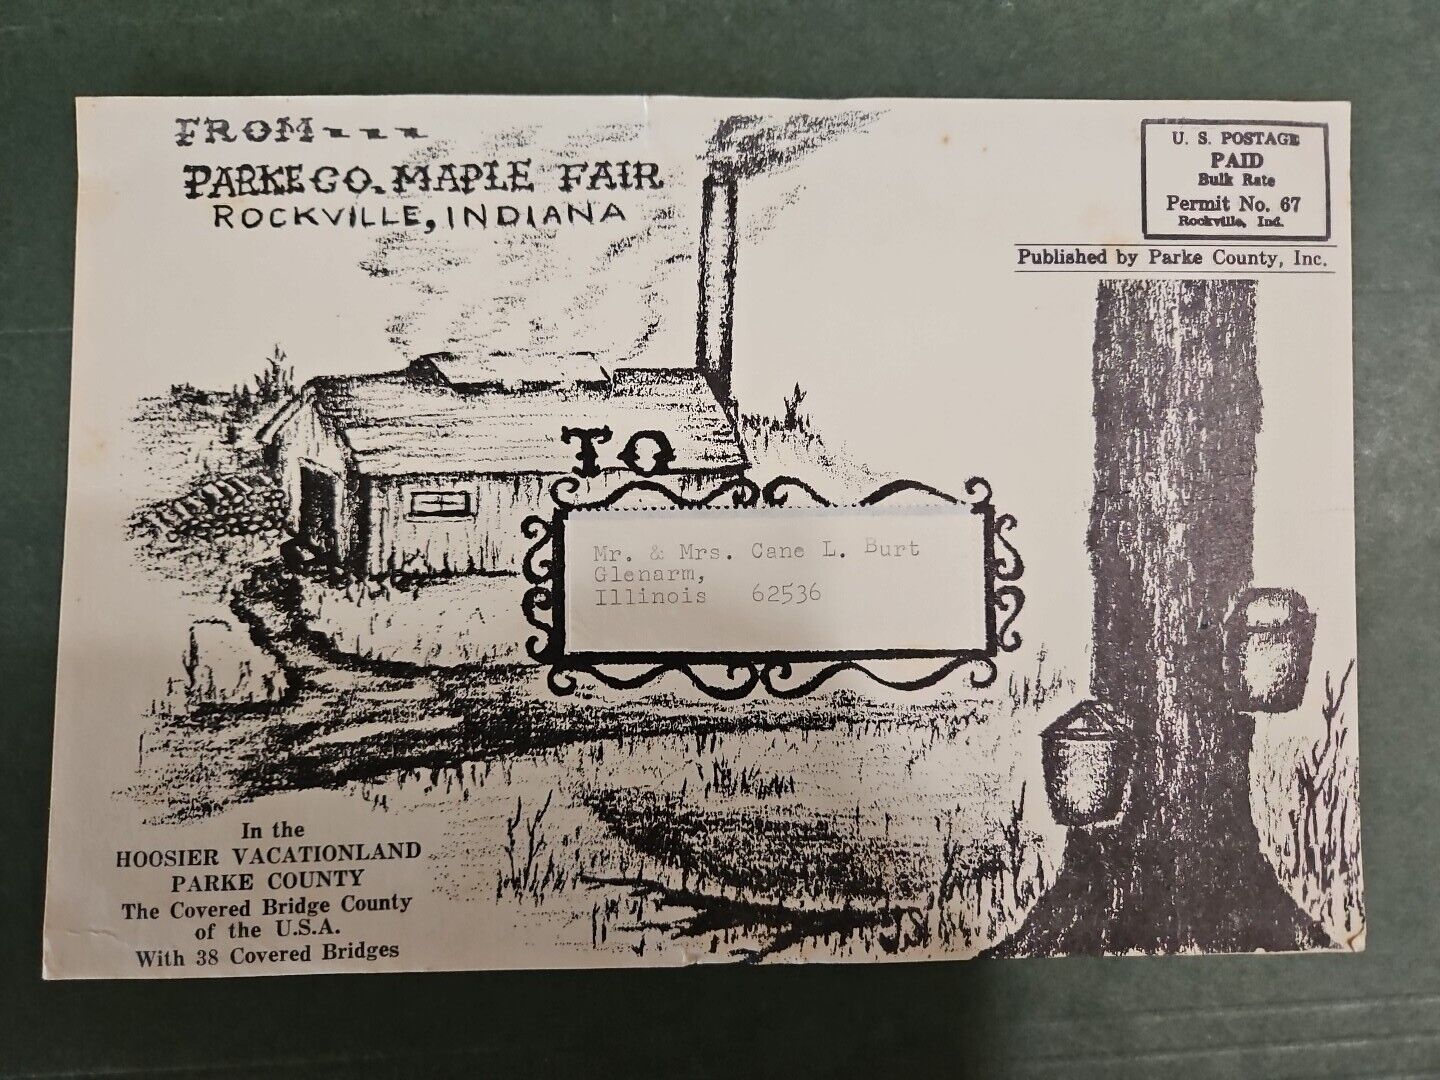 vintage 1967 fair program. Parker County Maple Fair Post Card